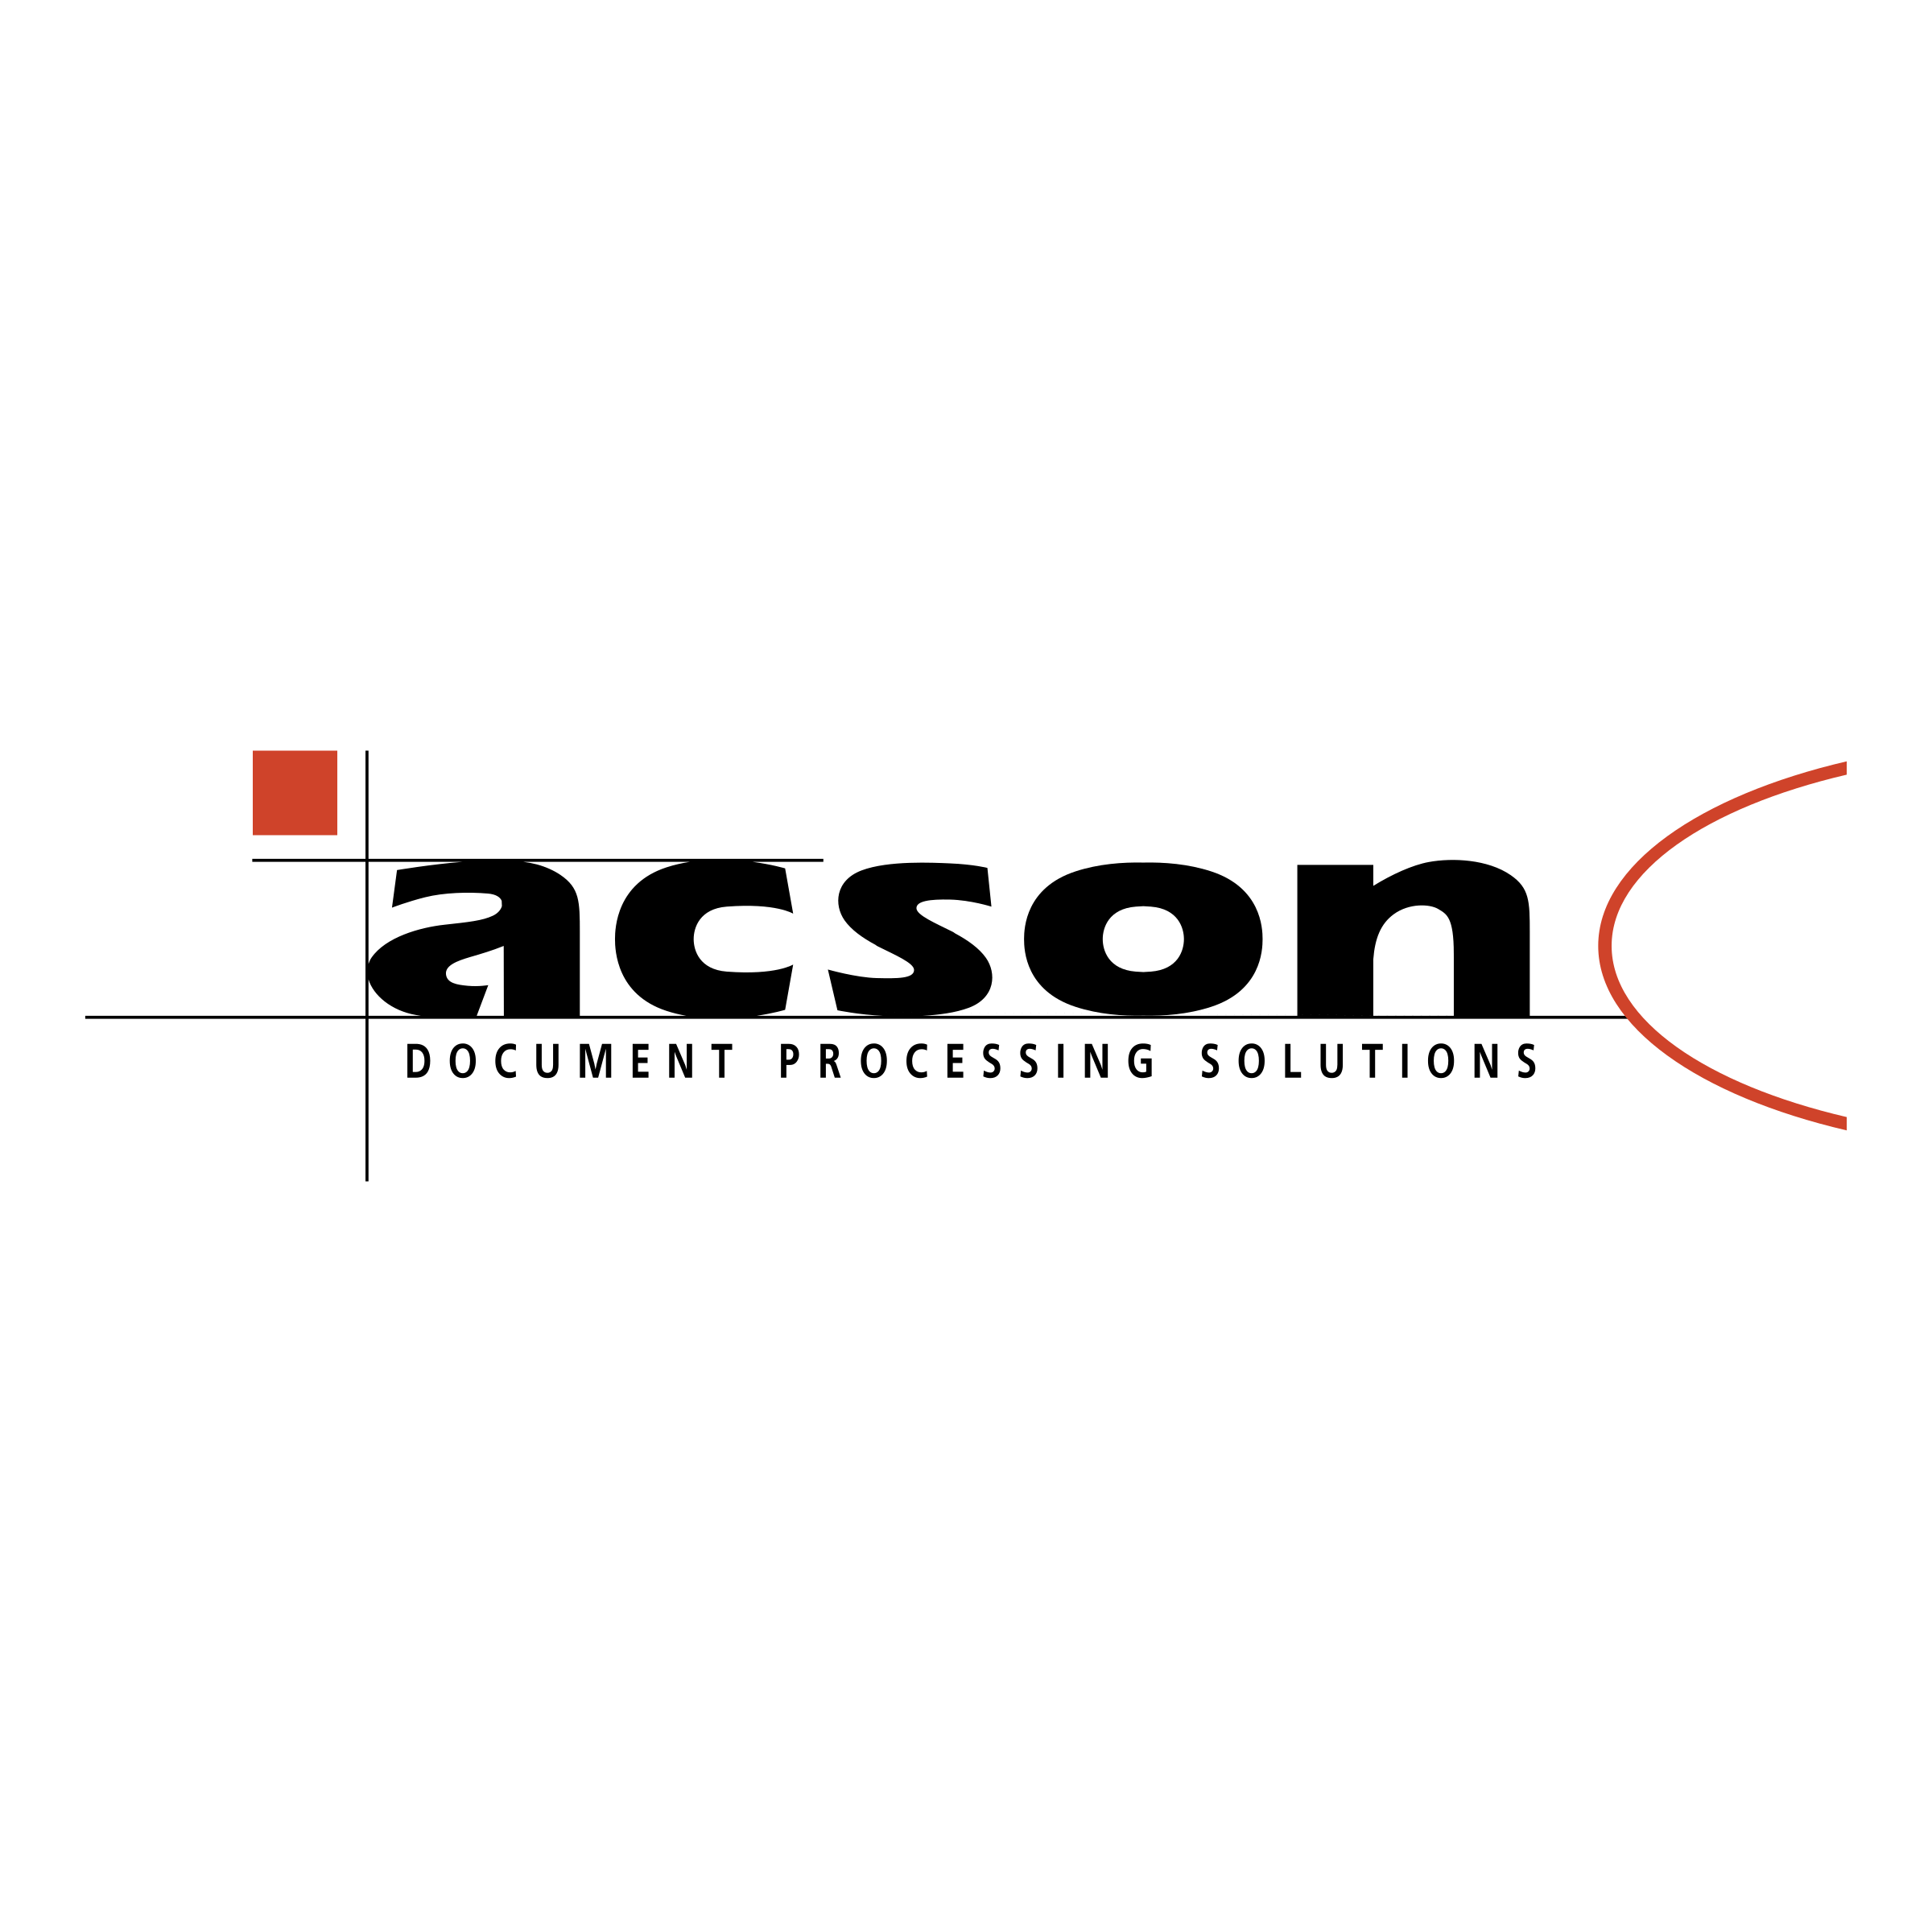 Acson Logo - Acson Logo PNG Transparent & SVG Vector